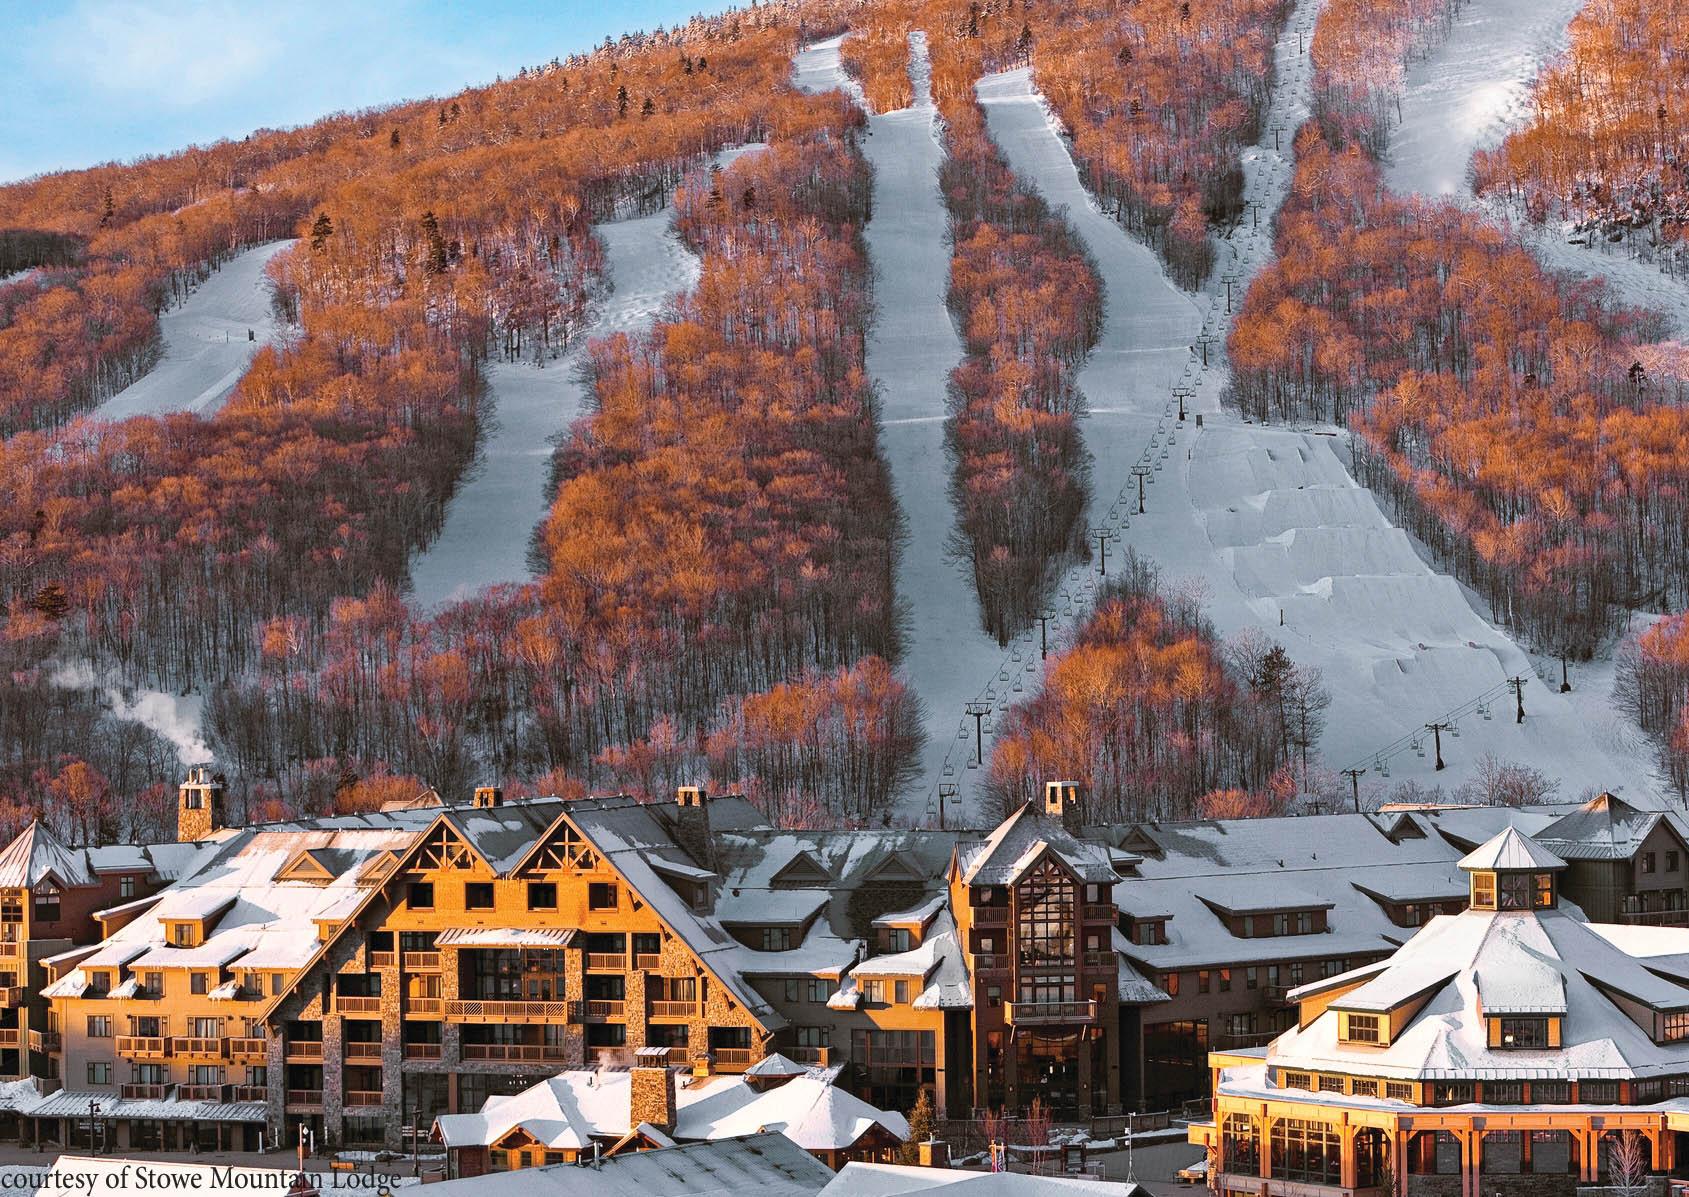 Lodge offers access to legendary ski resort